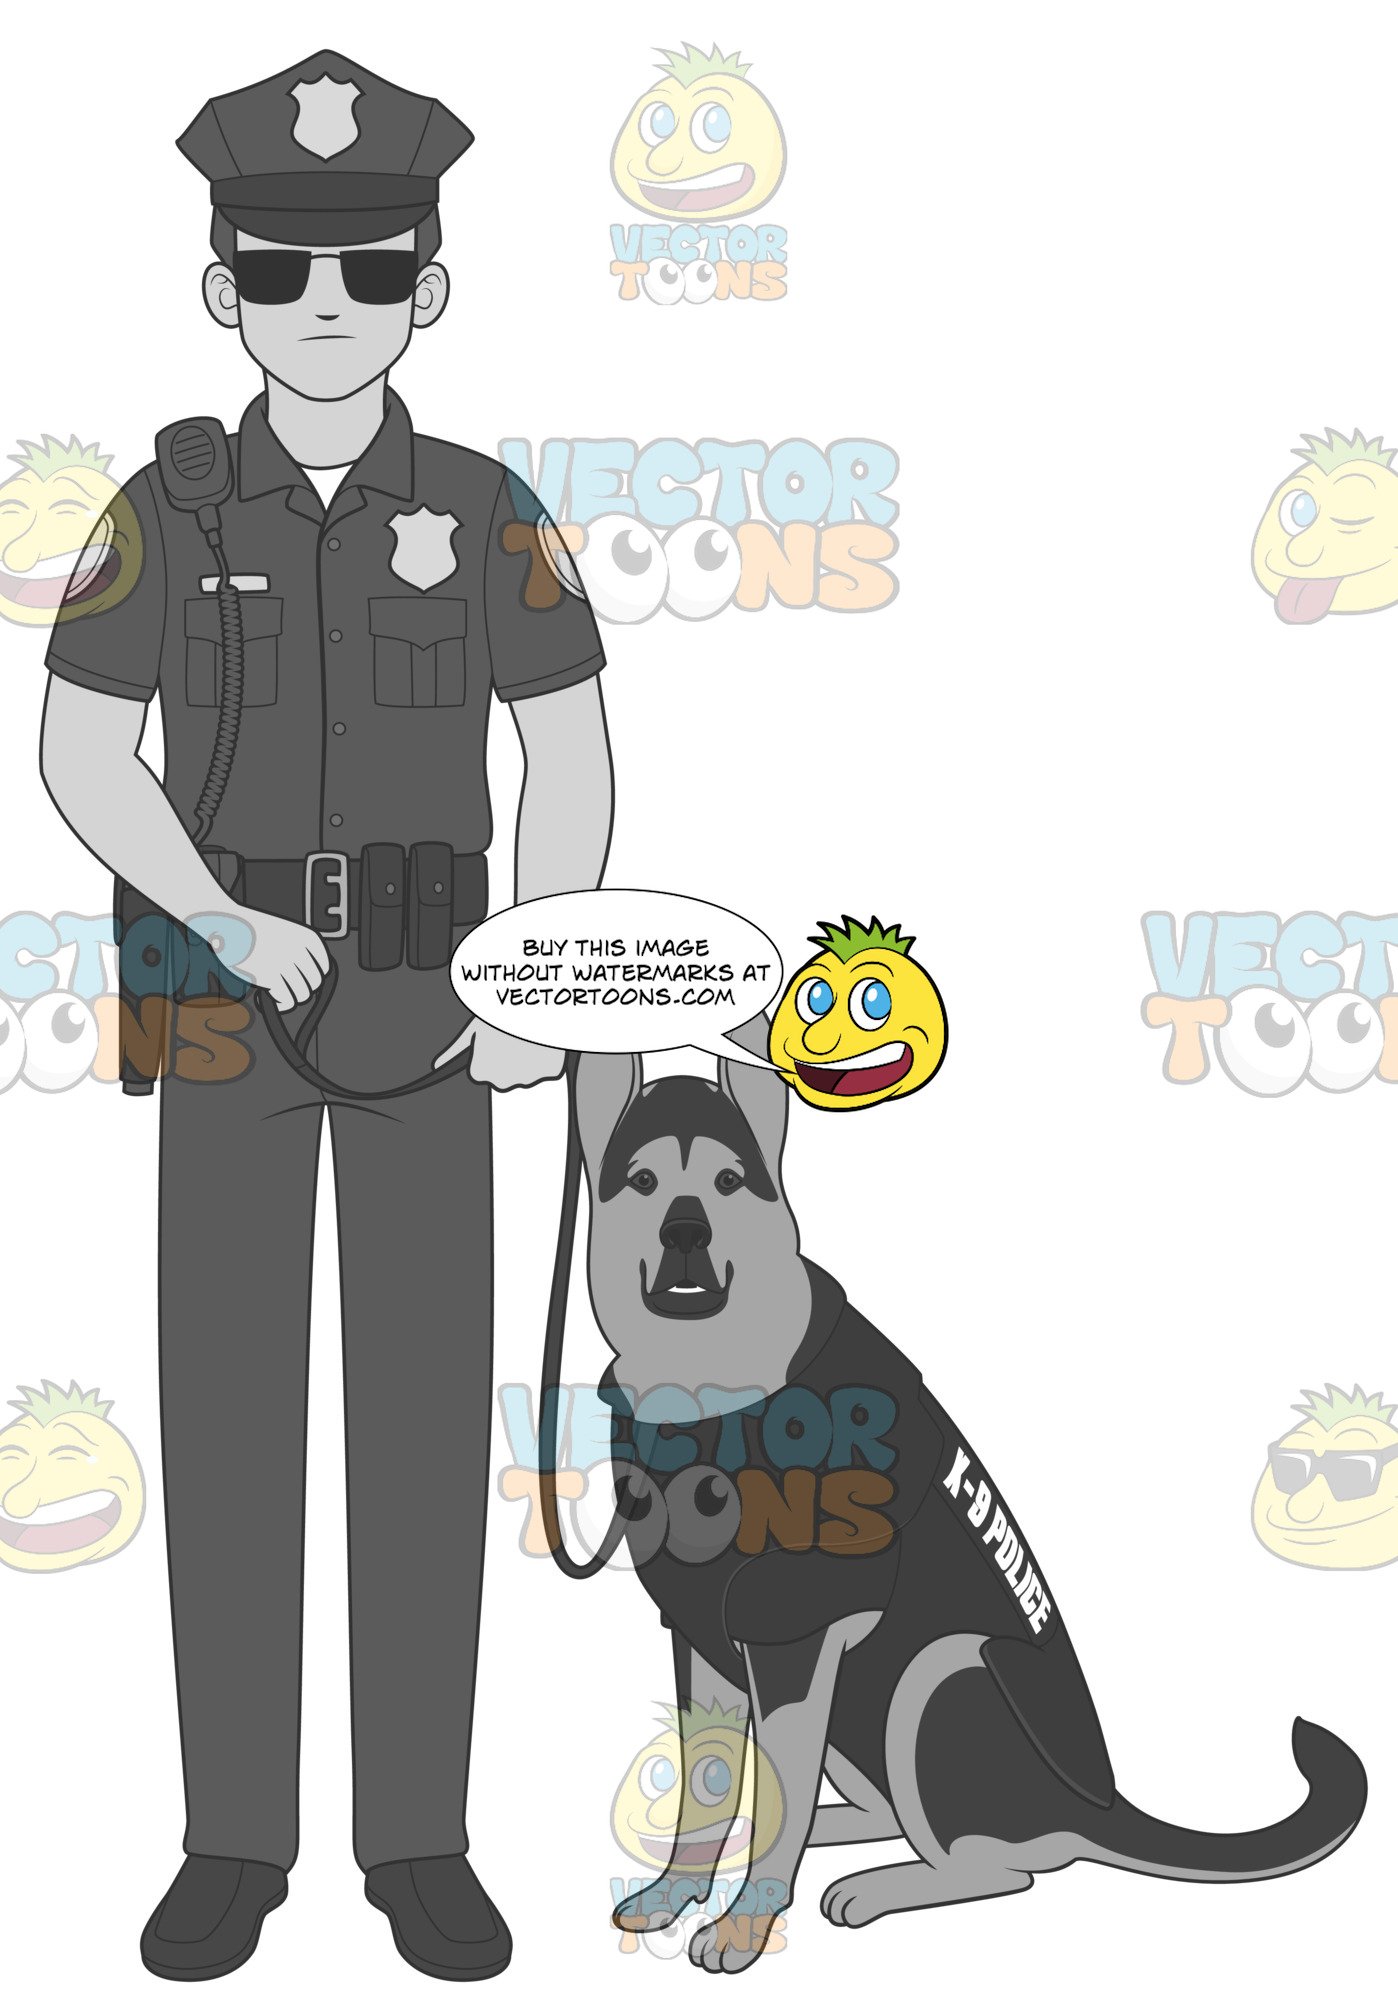 policeman clipart dog